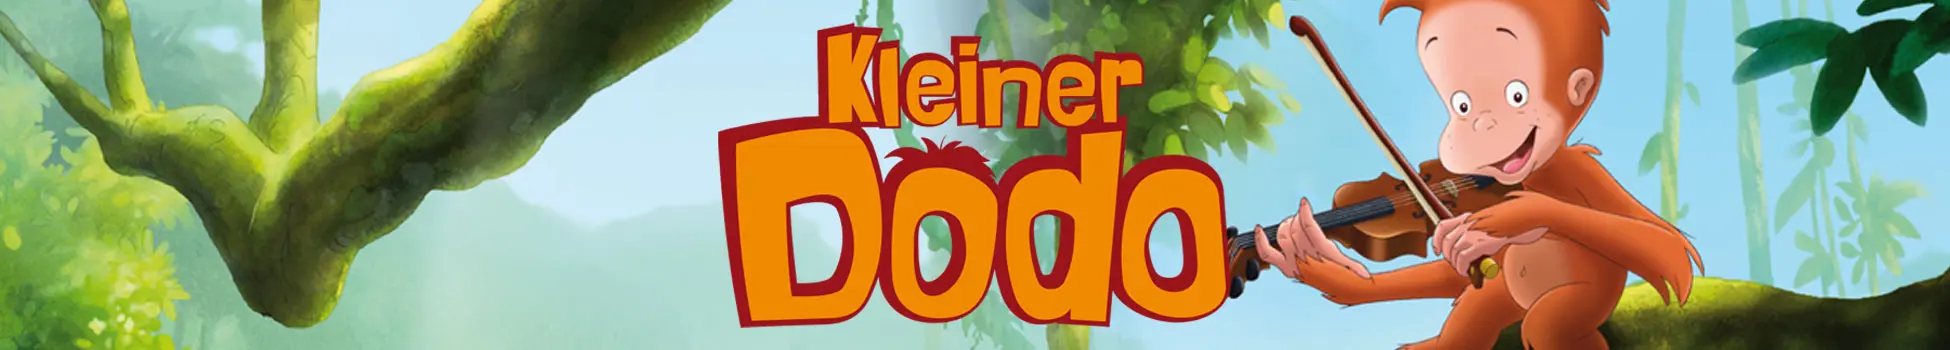 Kleiner Dodo - Artwork - Key Visual - Header